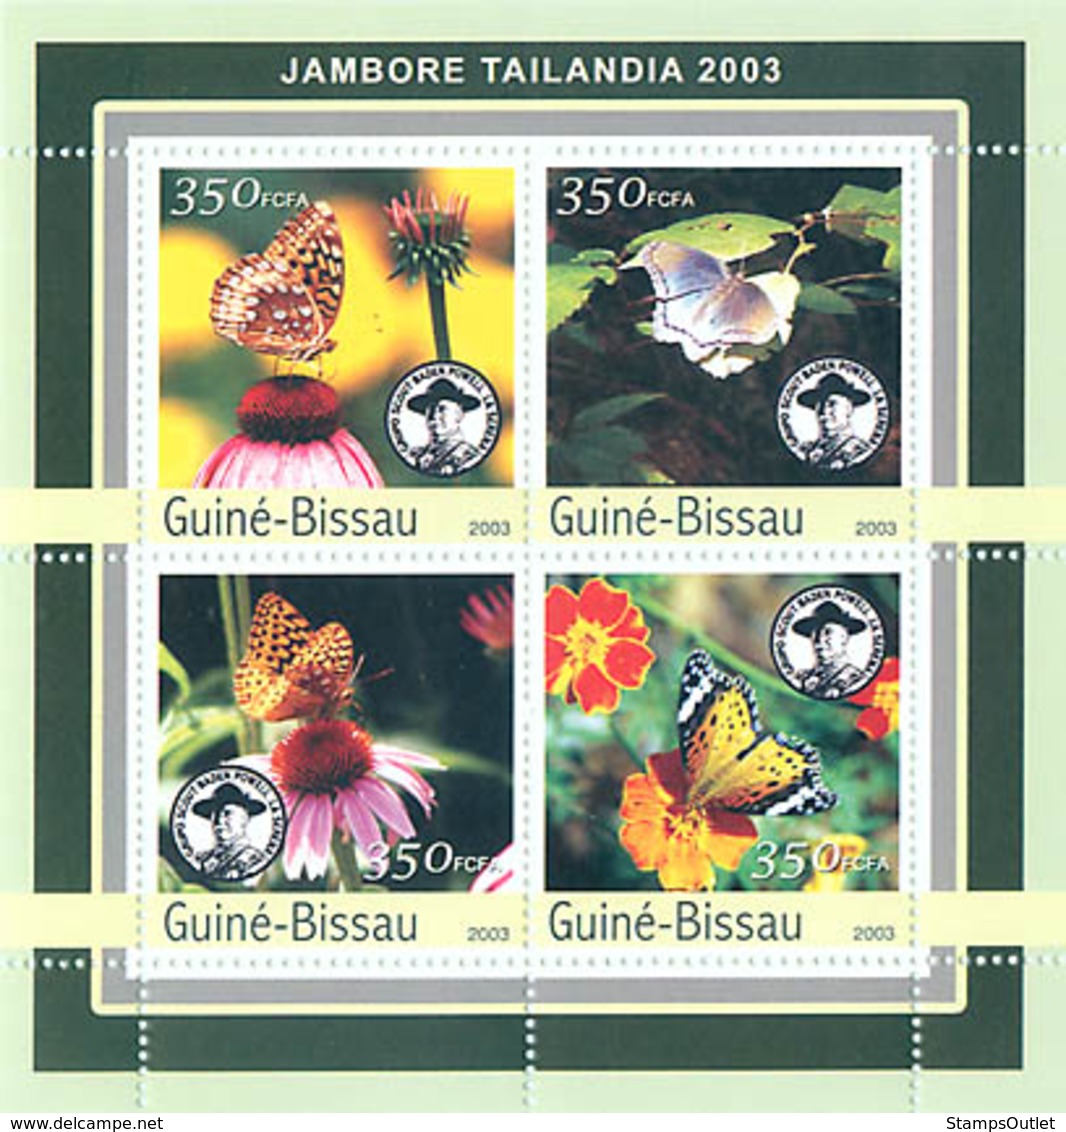 Guinea - Bissau 2003 - Jamboree Tailandia 2003 - Butterfly 4v. Y&T 1054-1057, Michel 2033-2036 - Guinea-Bissau